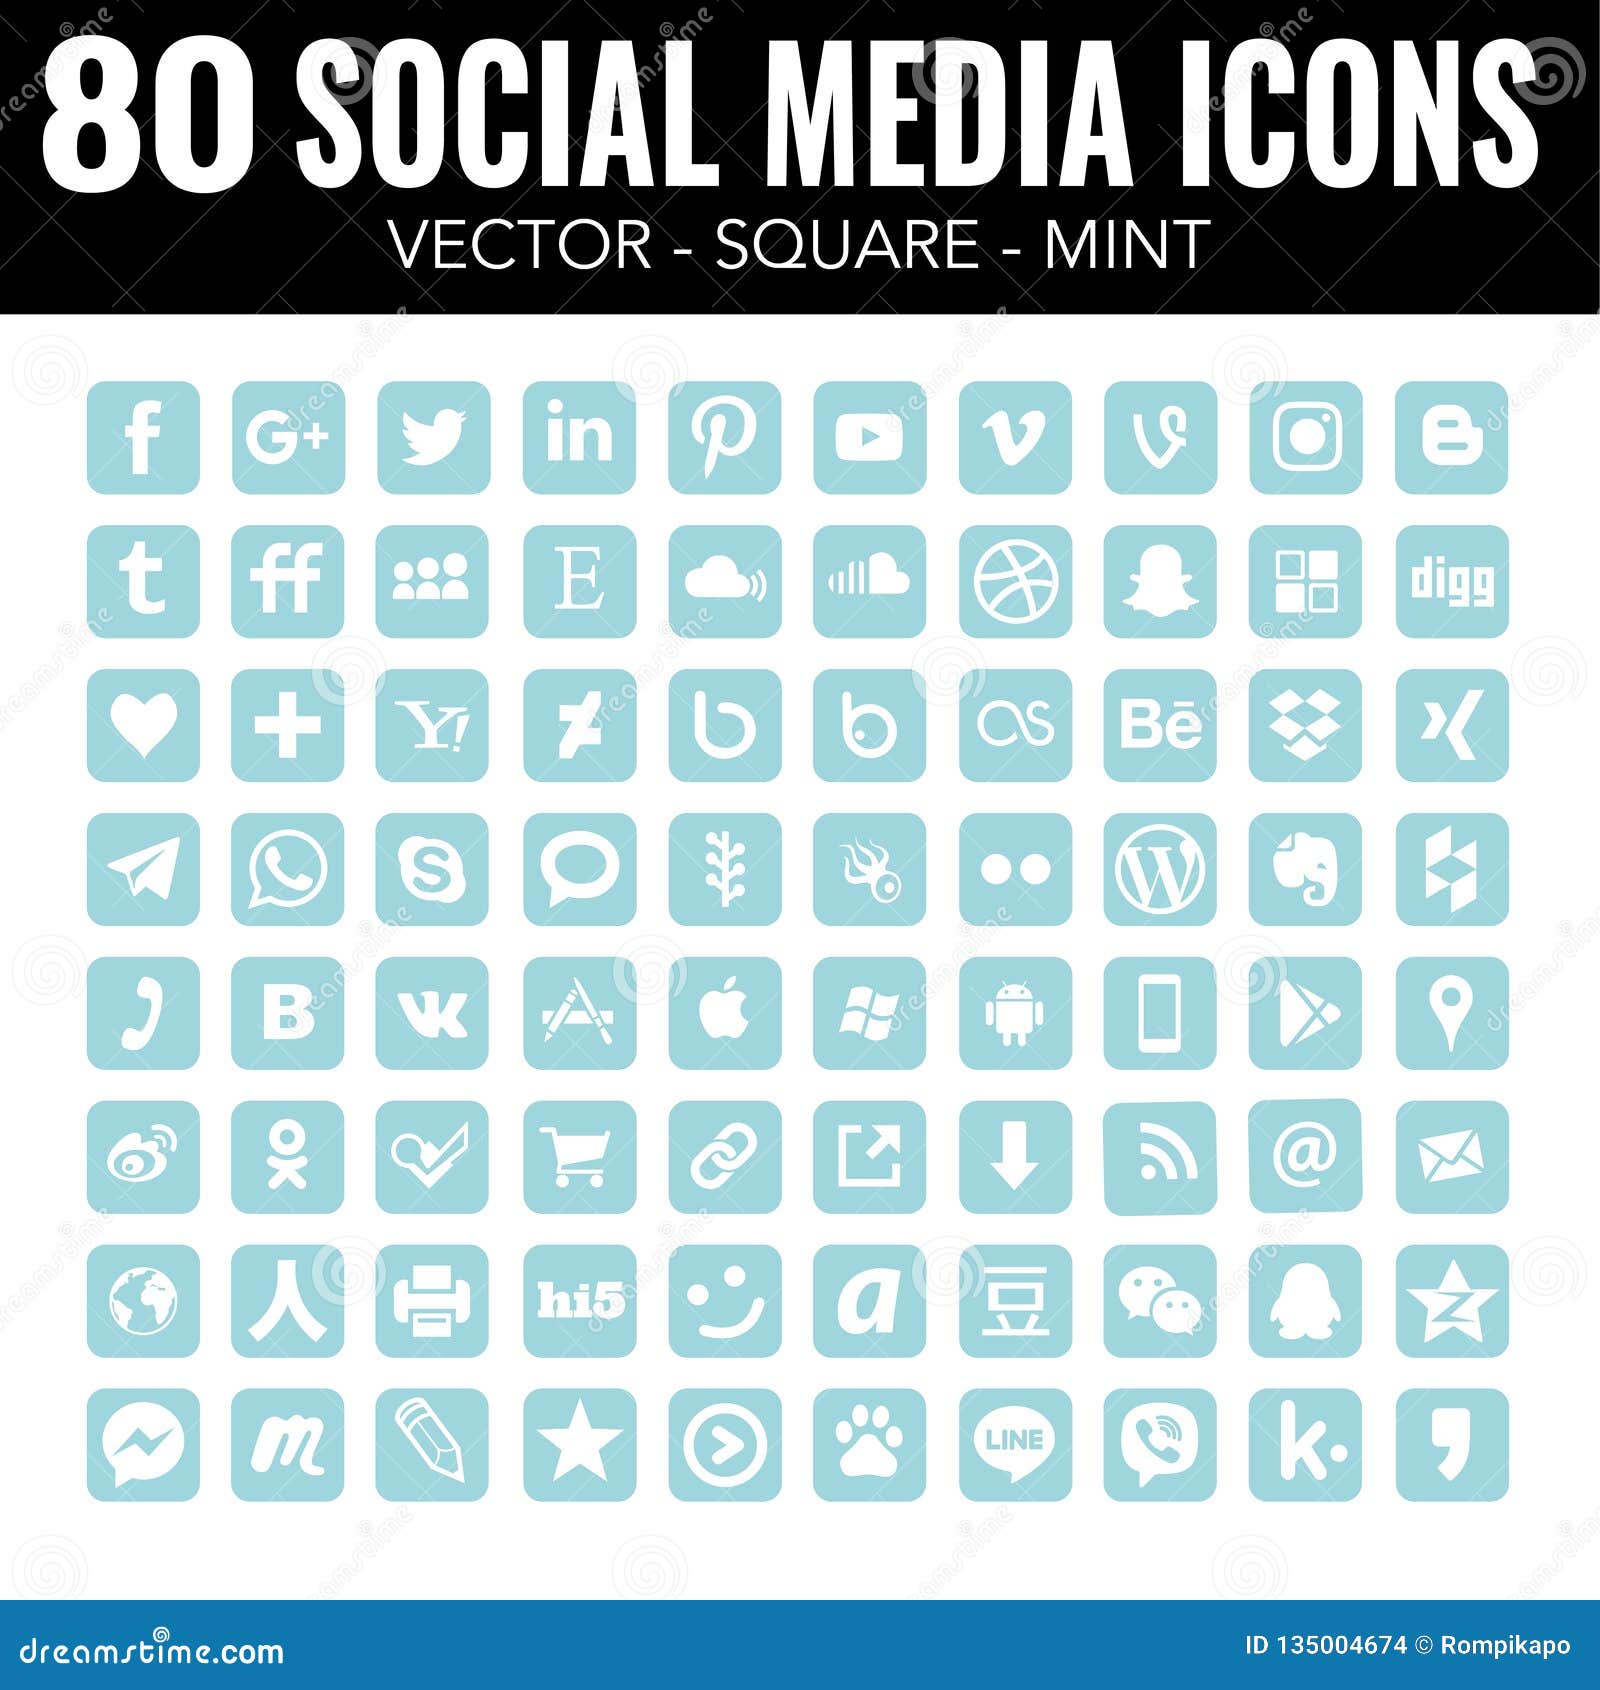 Blue Mint Square social Media Icons